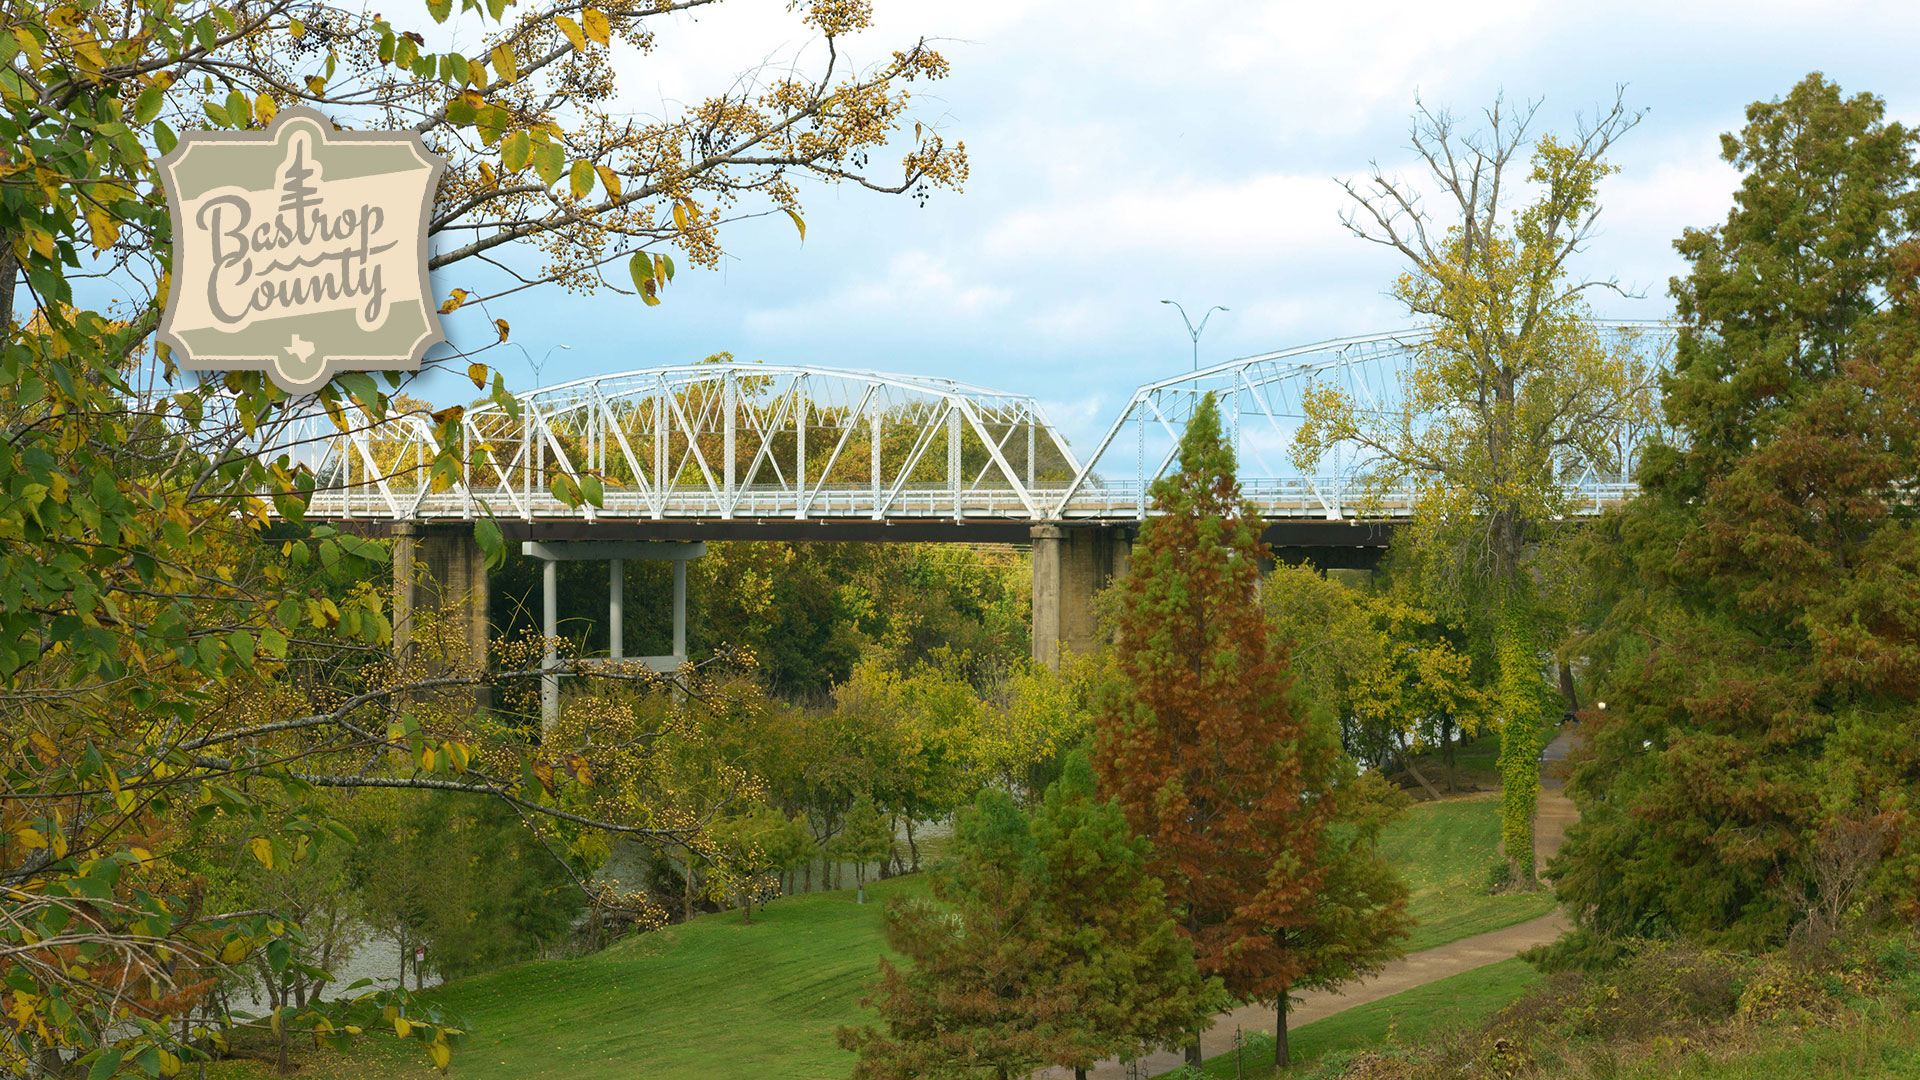 View of Bastrop Bridge from river banks